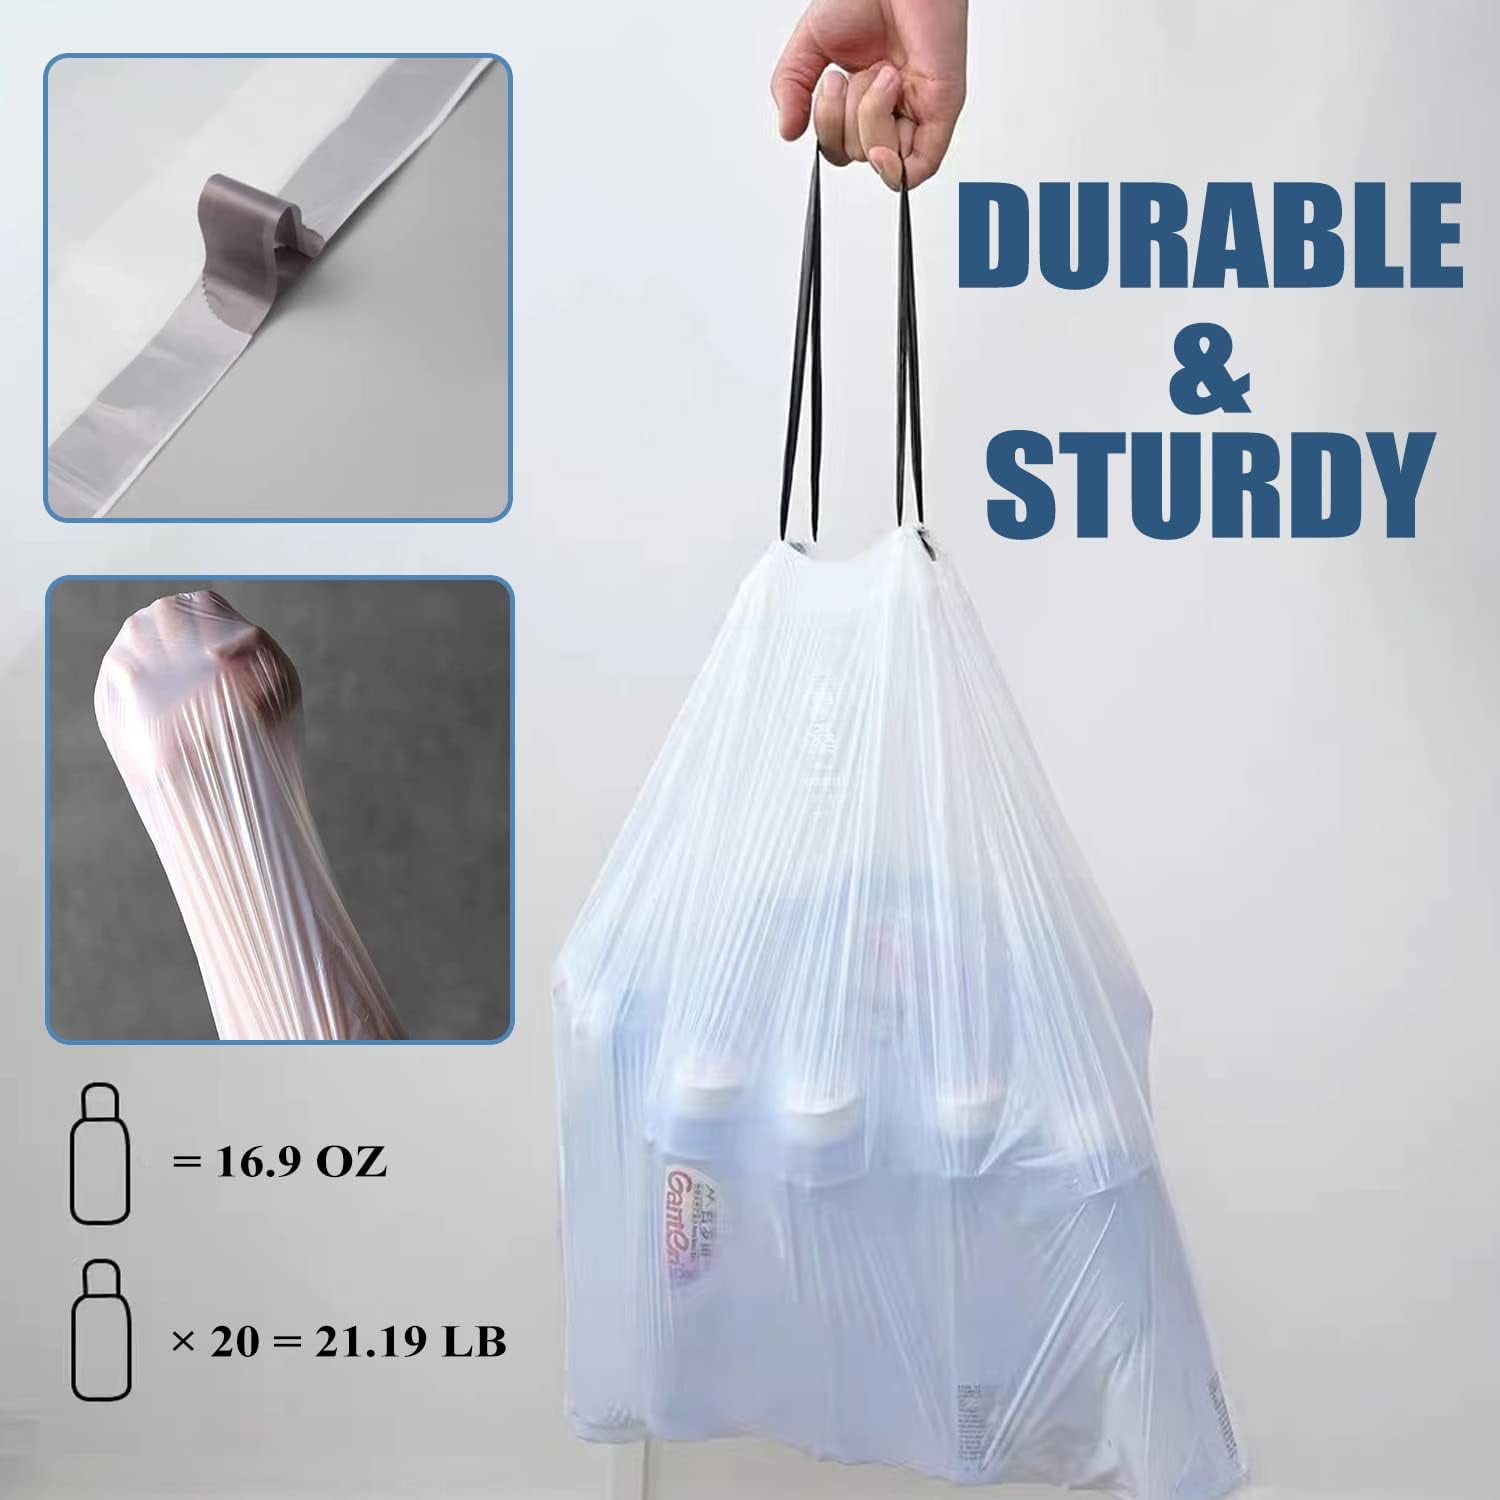 45 Count 4 Gallon Drawstring Trash Bags - Perfect For Bathroom